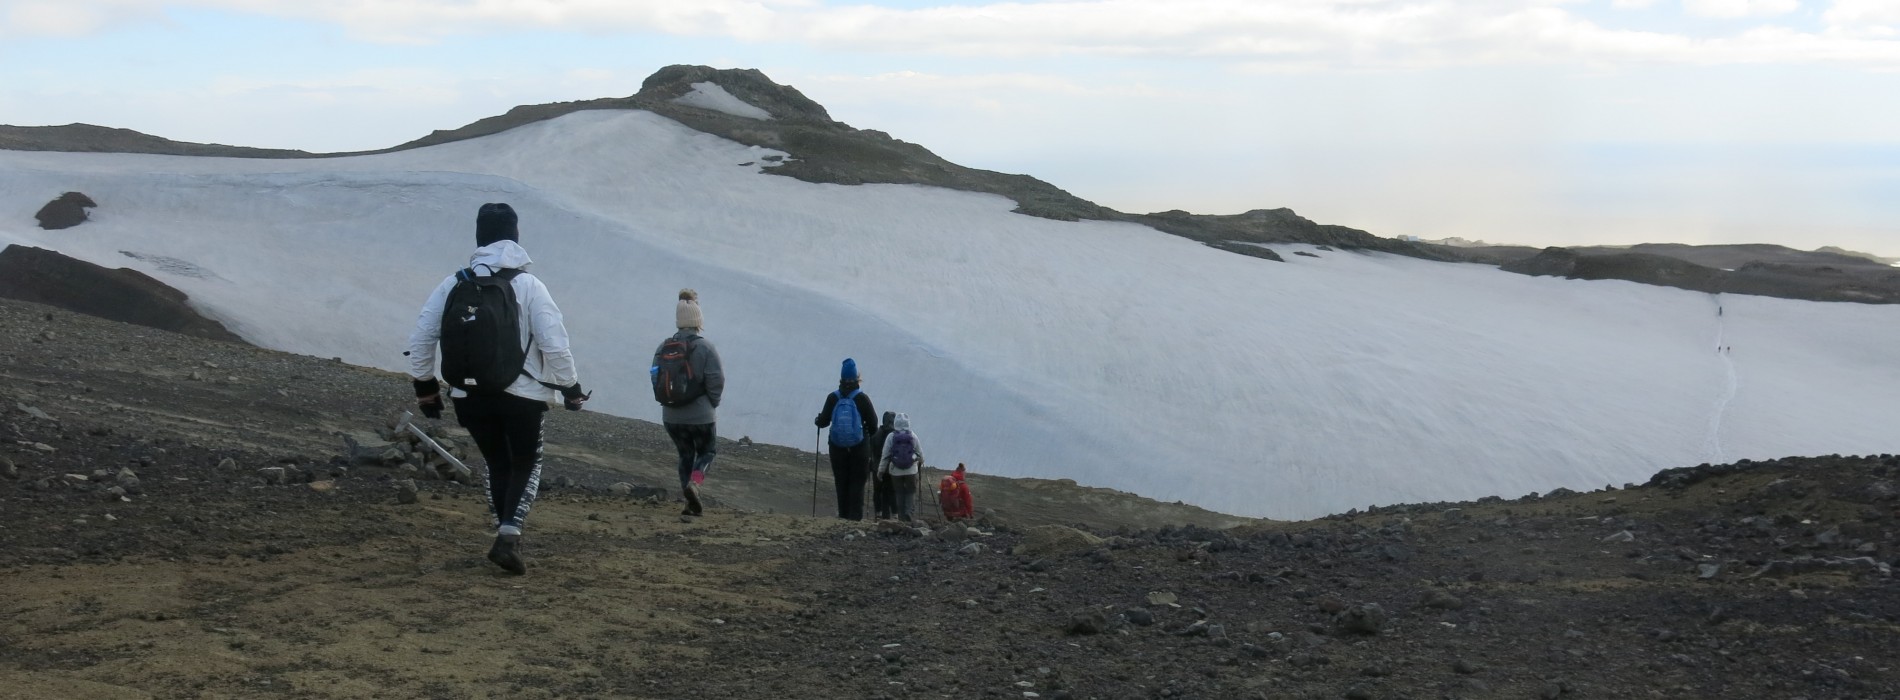 Winter trekking in Iceland